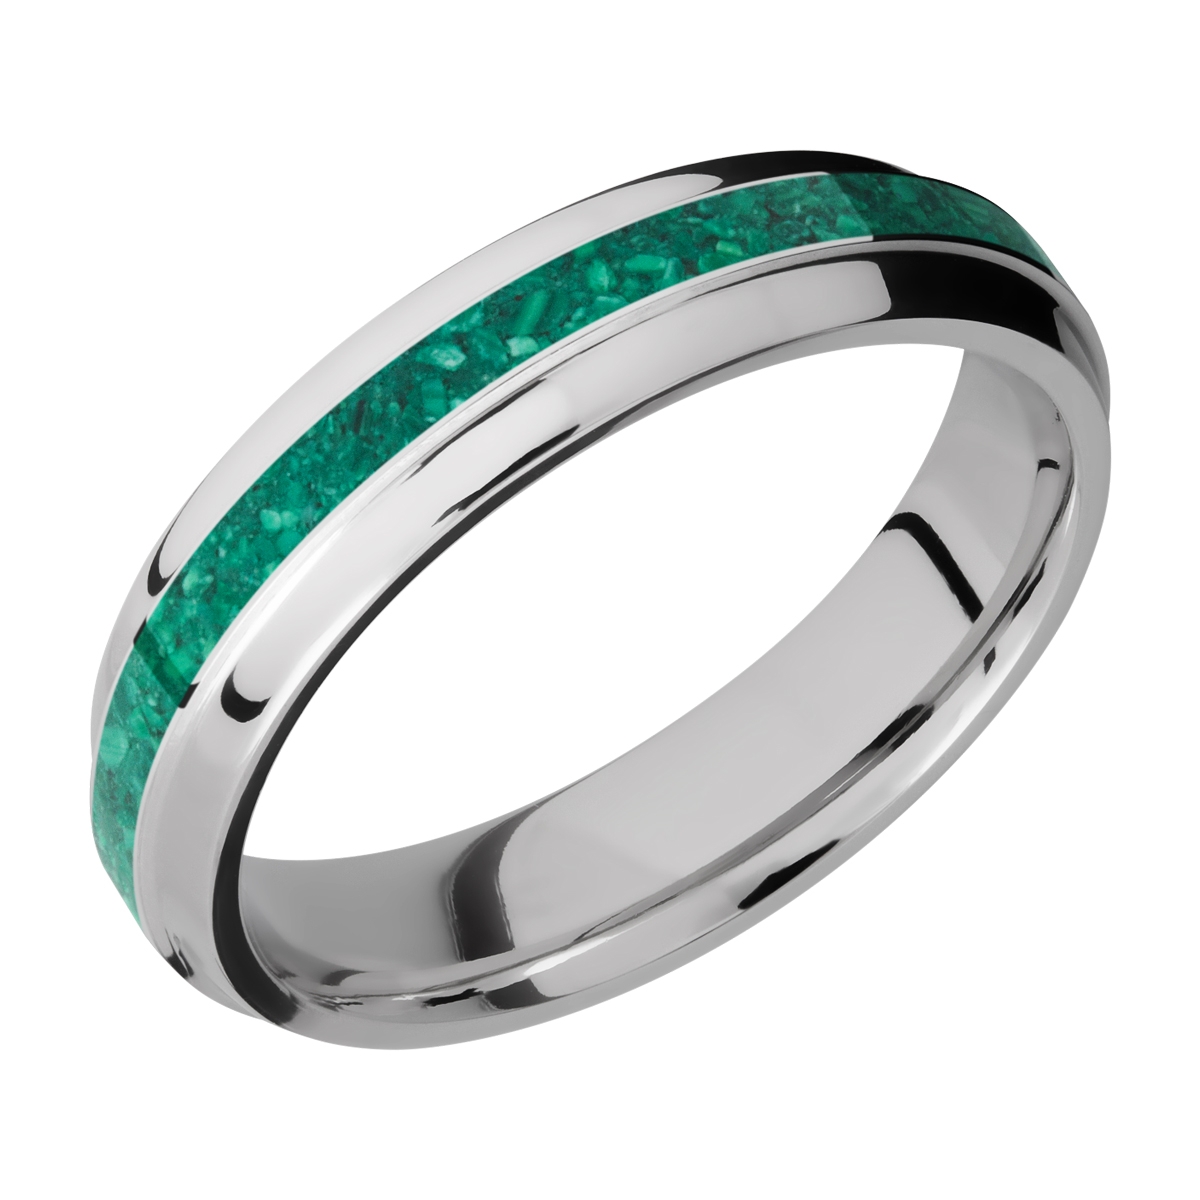 Lashbrook CC5B12(S)/MOSAIC Cobalt Chrome Wedding Ring or Band